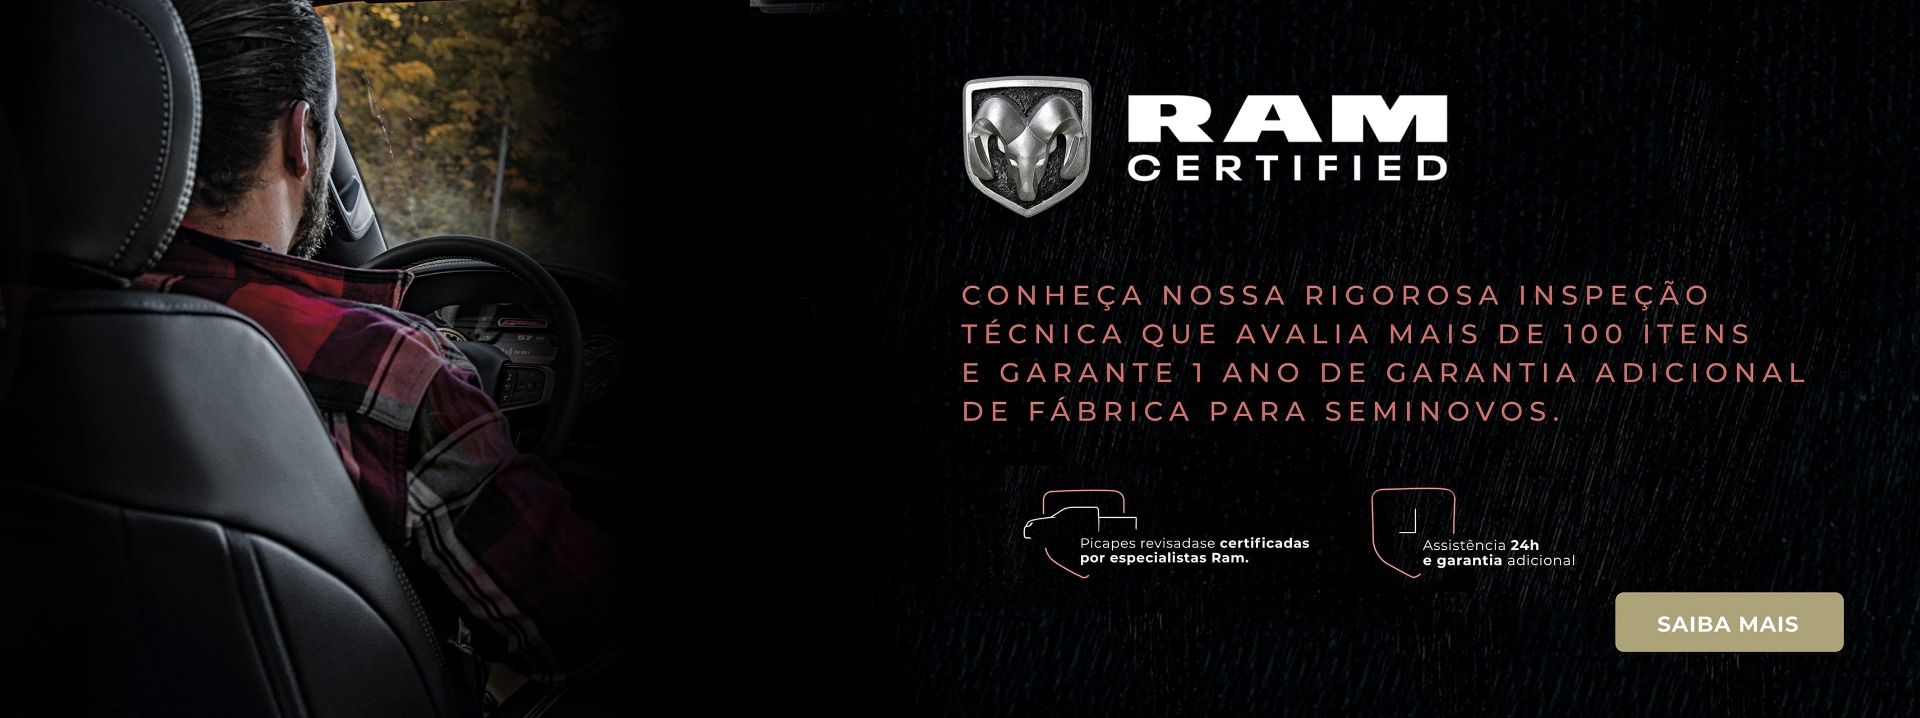 banner ram certified